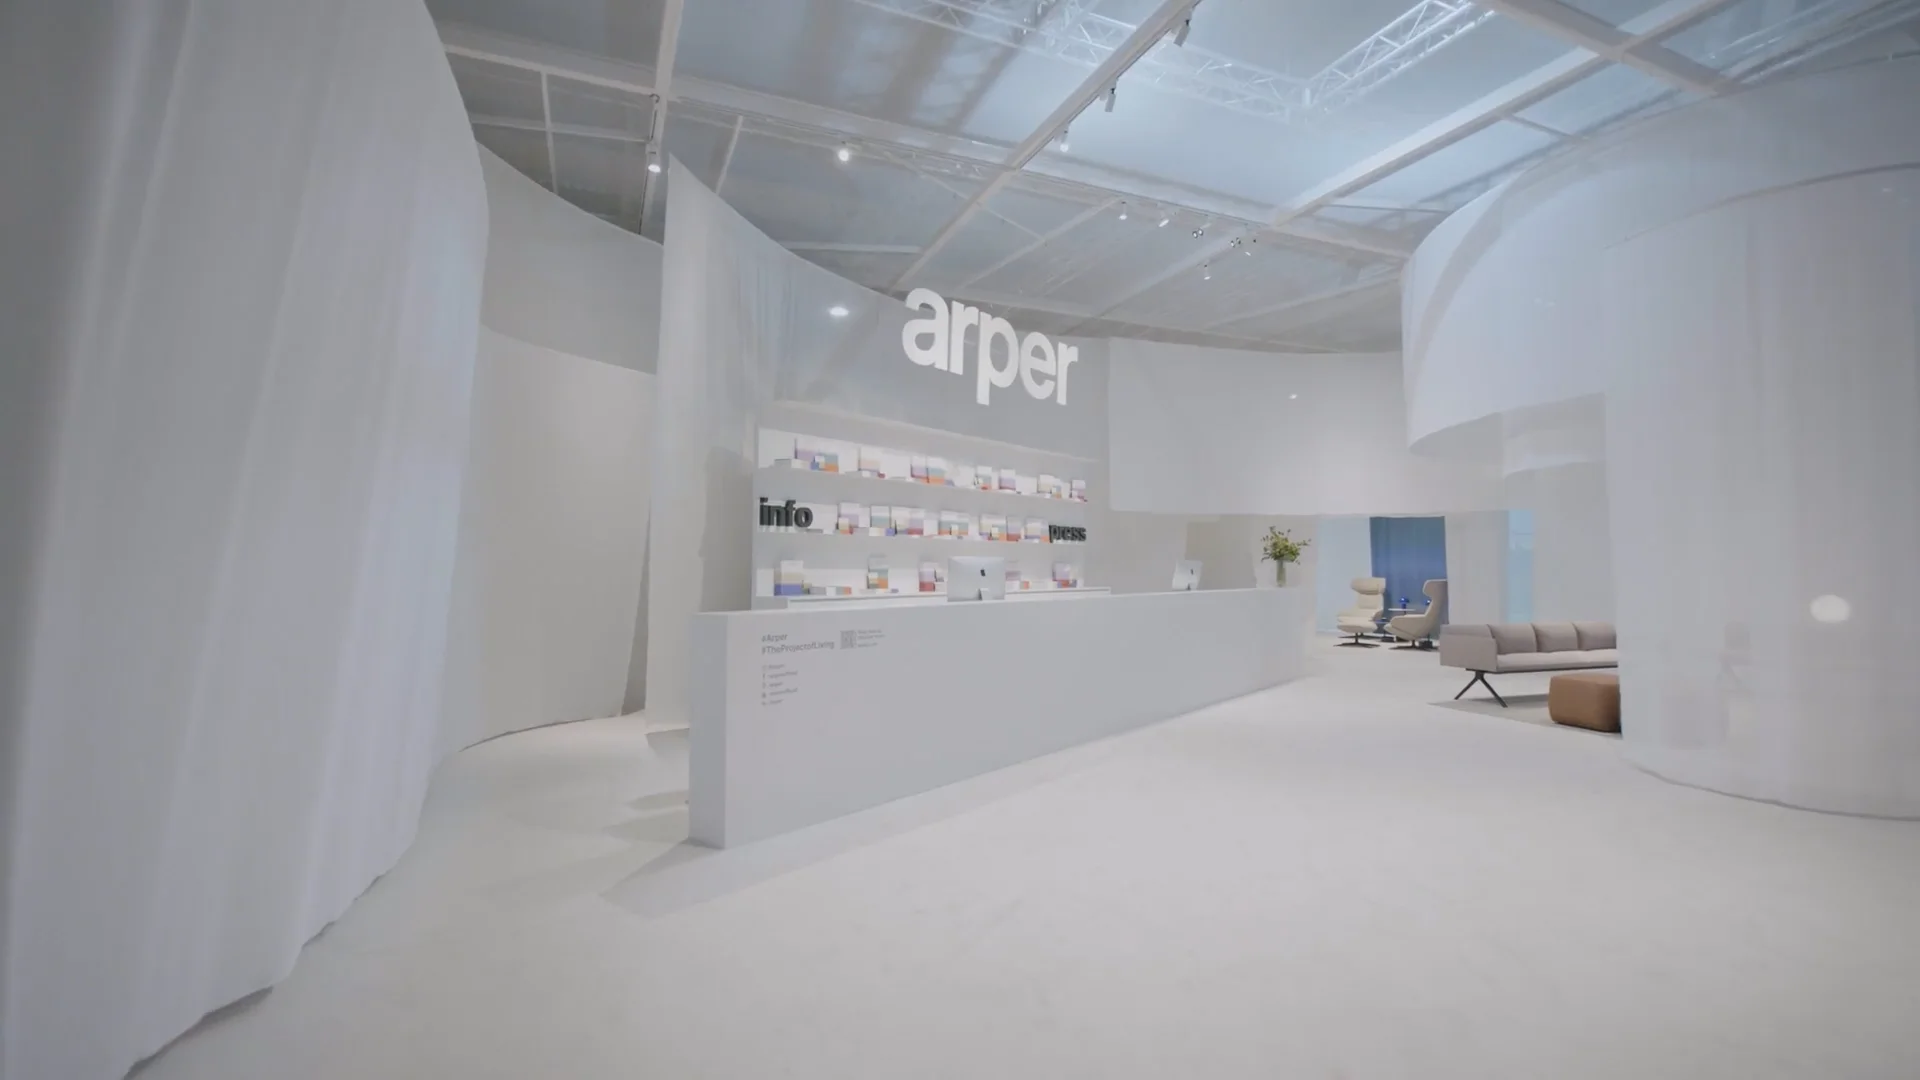 Arper exhibited at Salone del Mobile 2022